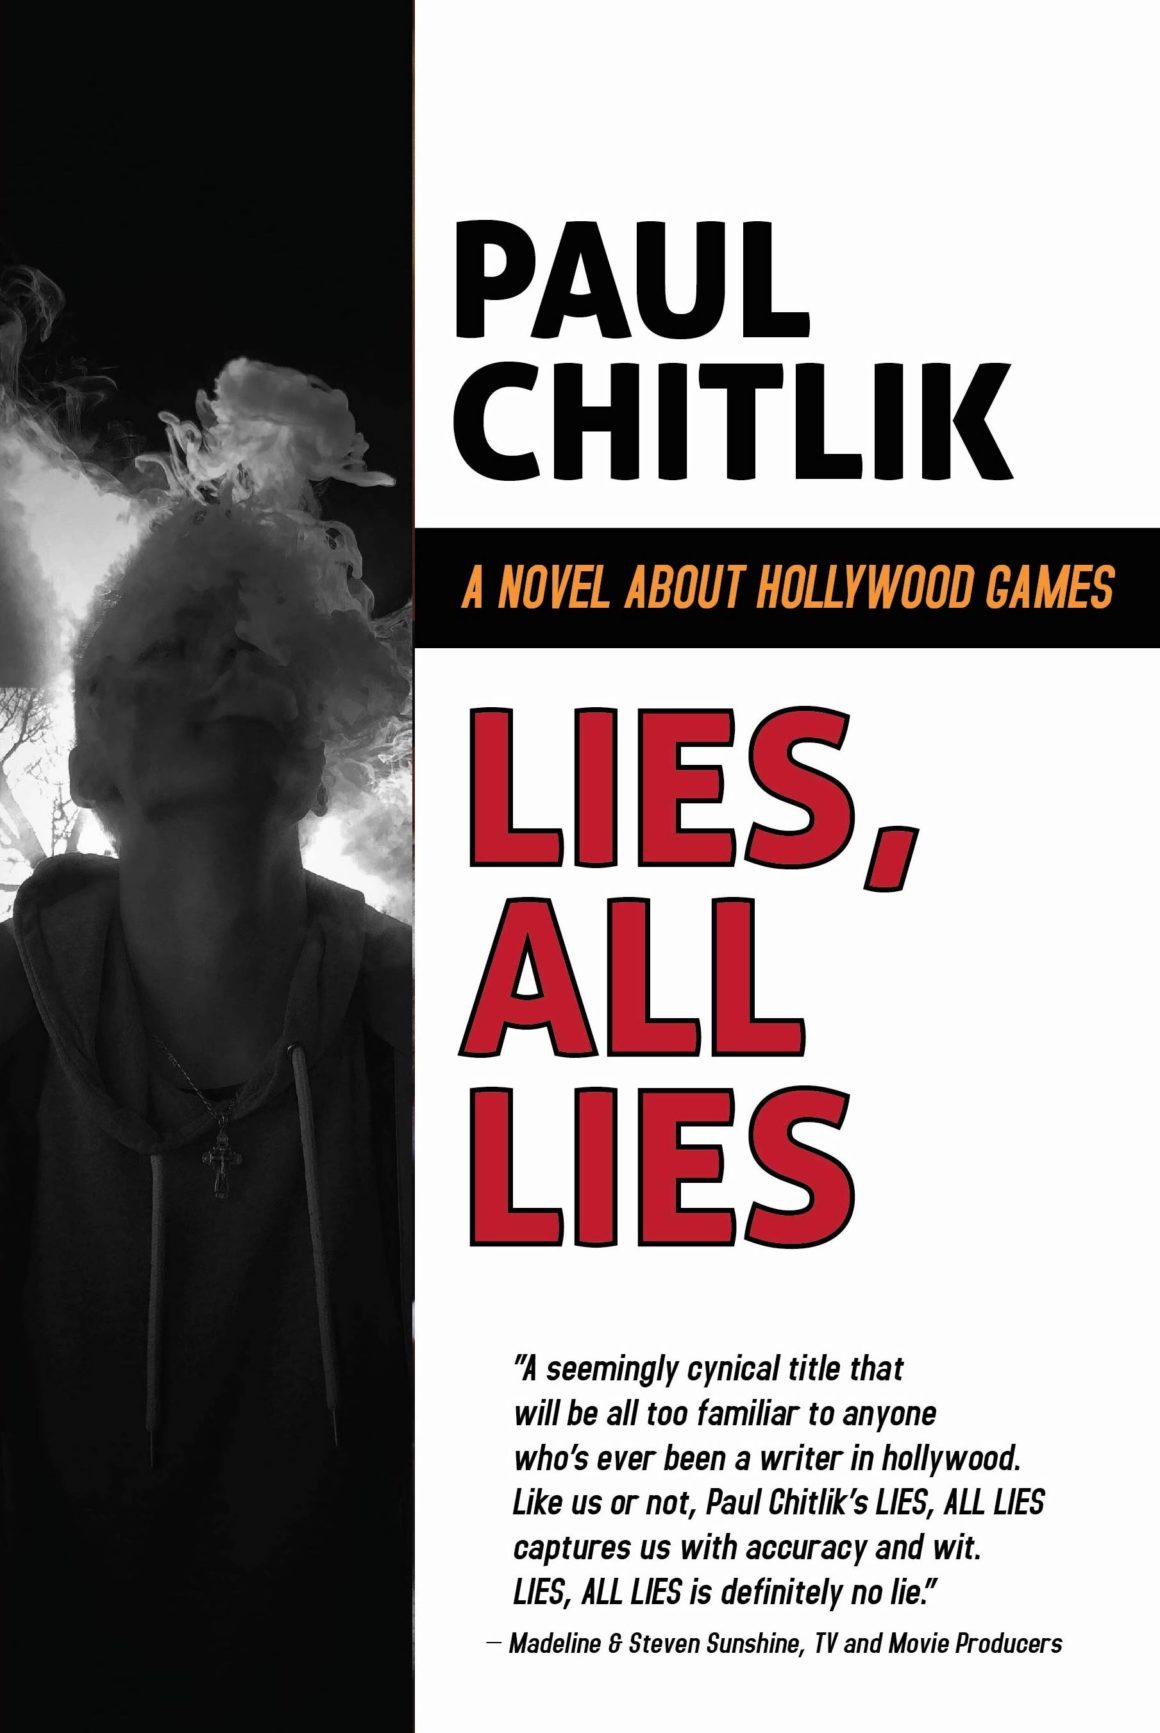 Lies, All Lies by Paul Chitlik